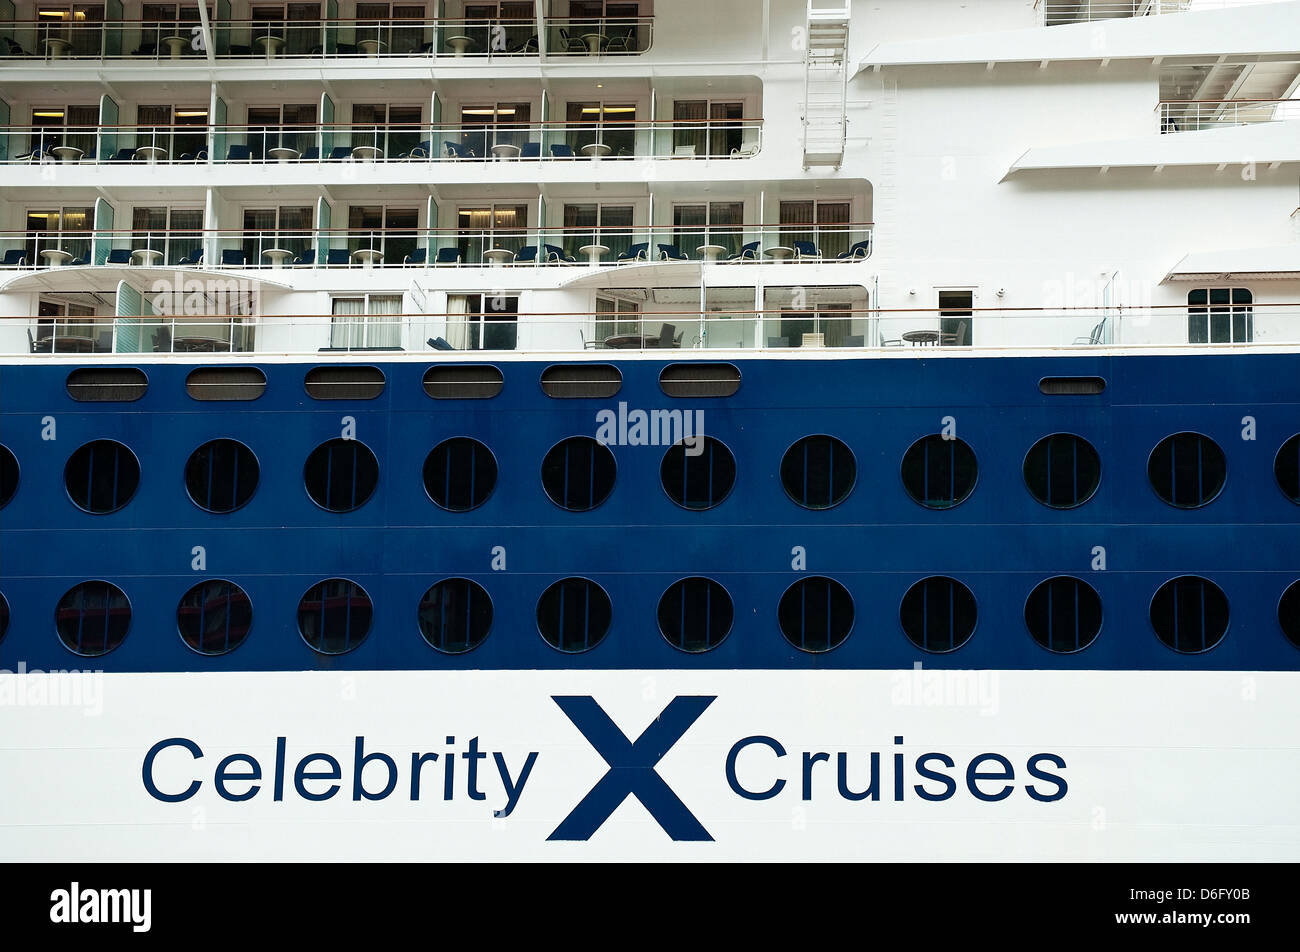 Celebrity Cruise ship detail. Stock Photo